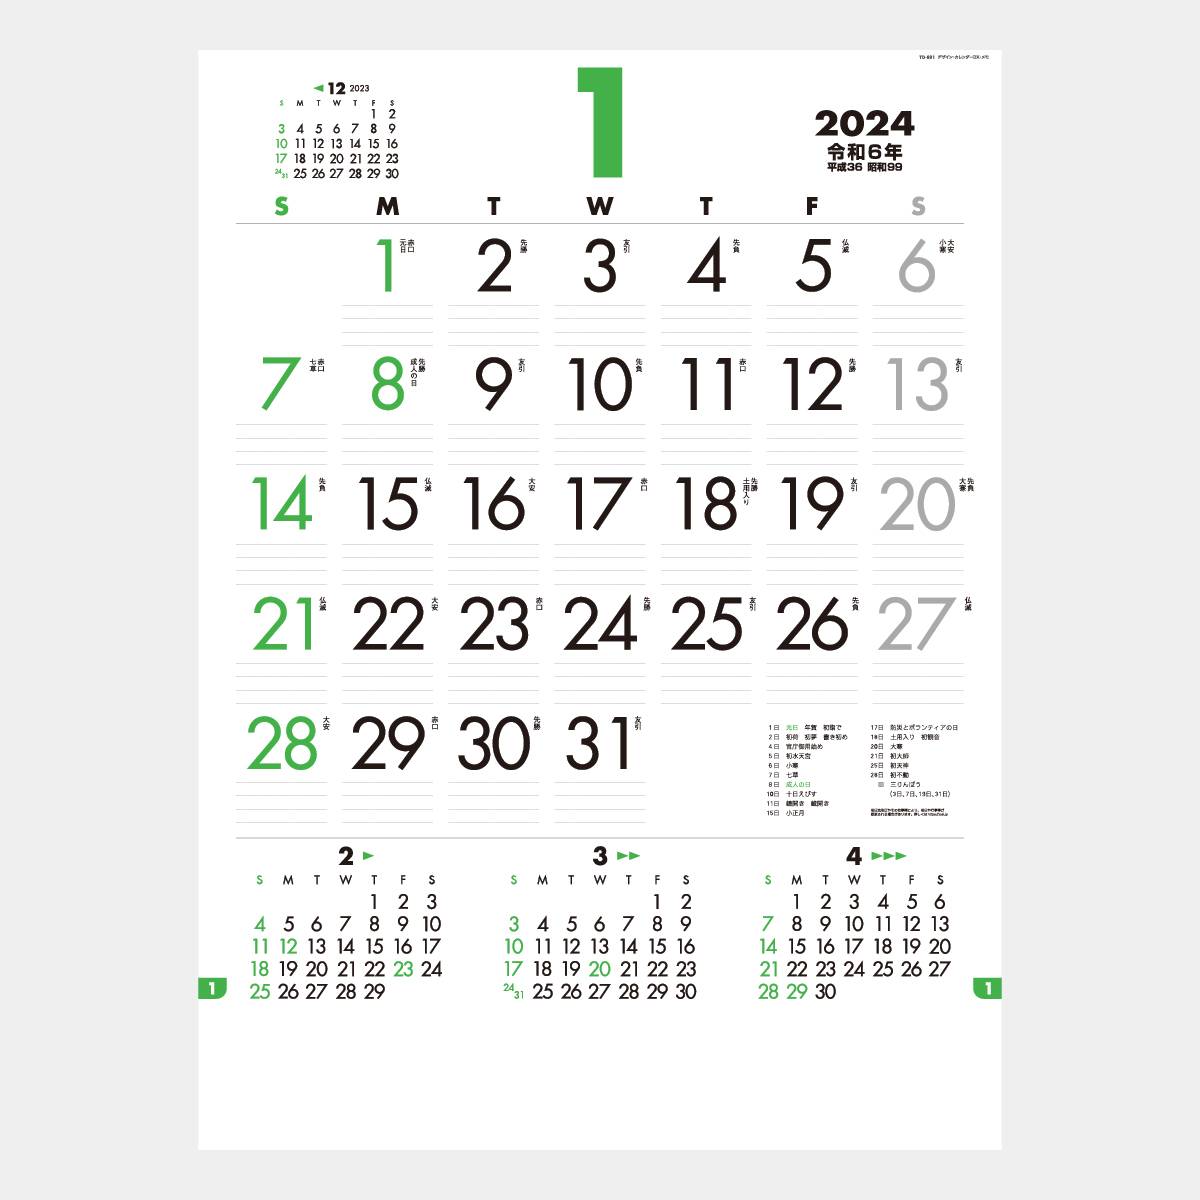 TD-691 デザイン・カレンダーDX・メモ 2023年版の名入れカレンダーを格安で販売｜名入れカレンダー印刷.com